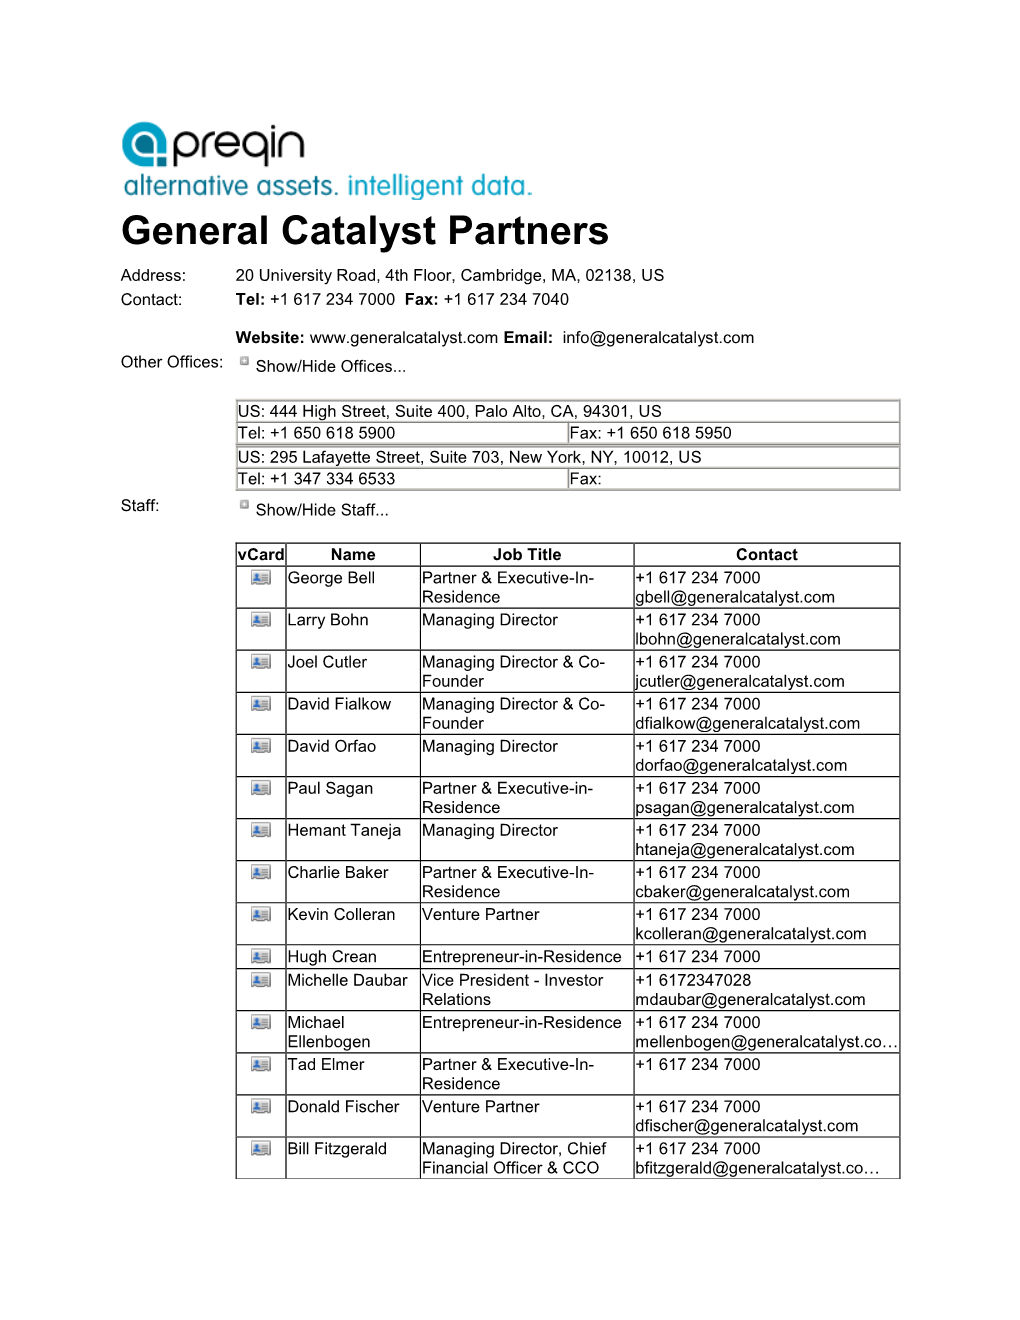 General Catalyst Partners Address: 20 University Road, 4Th Floor, Cambridge, MA, 02138, US Contact: Tel: +1 617 234 7000 Fax: +1 617 234 7040